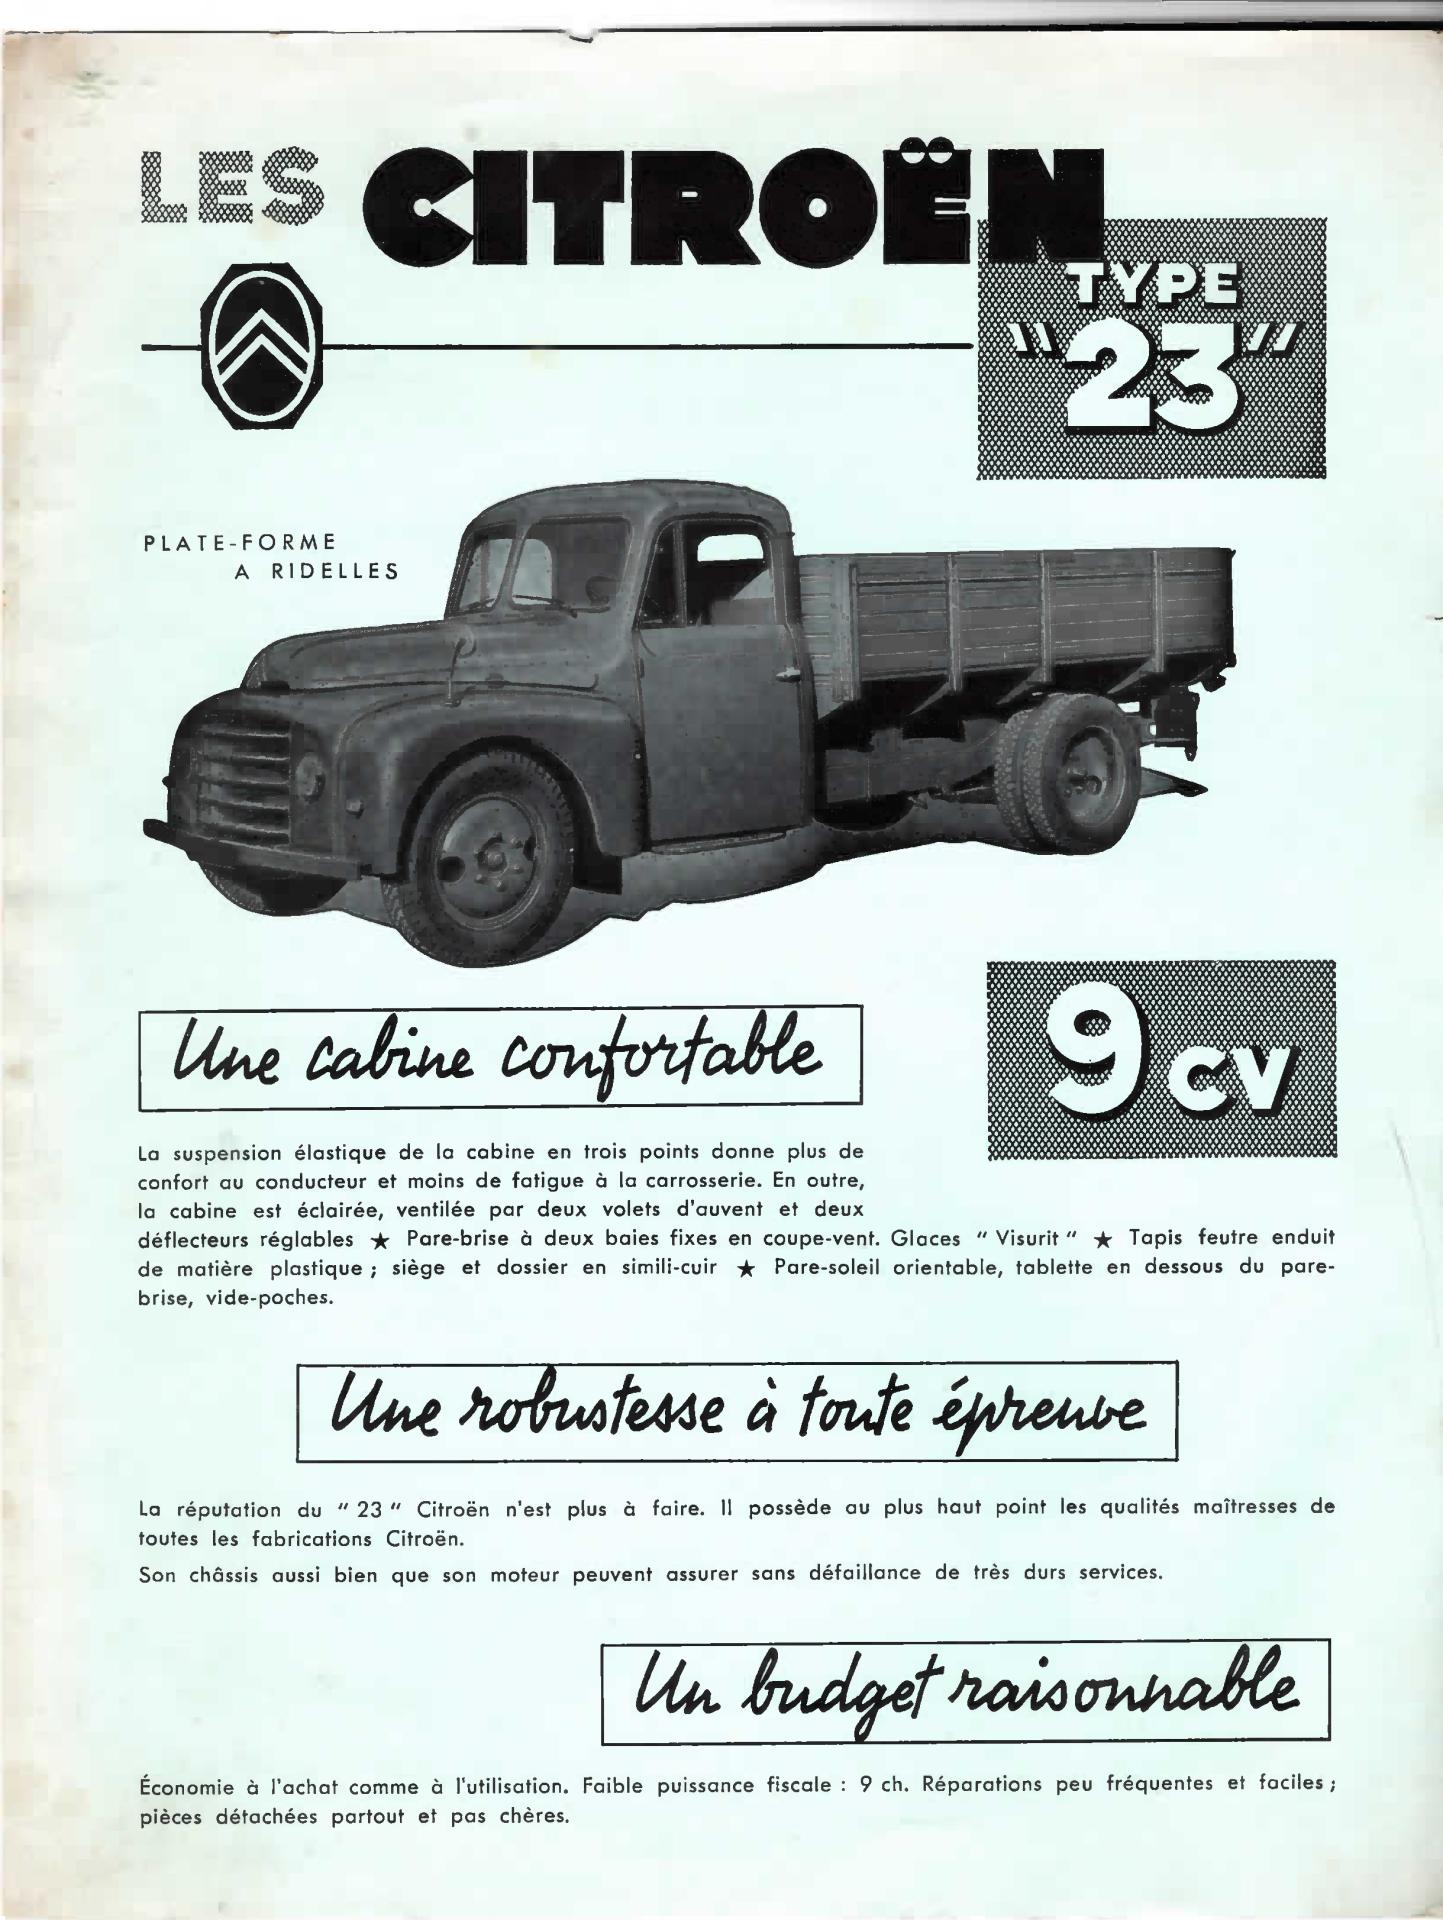 1954 Citroën 23 plateforme